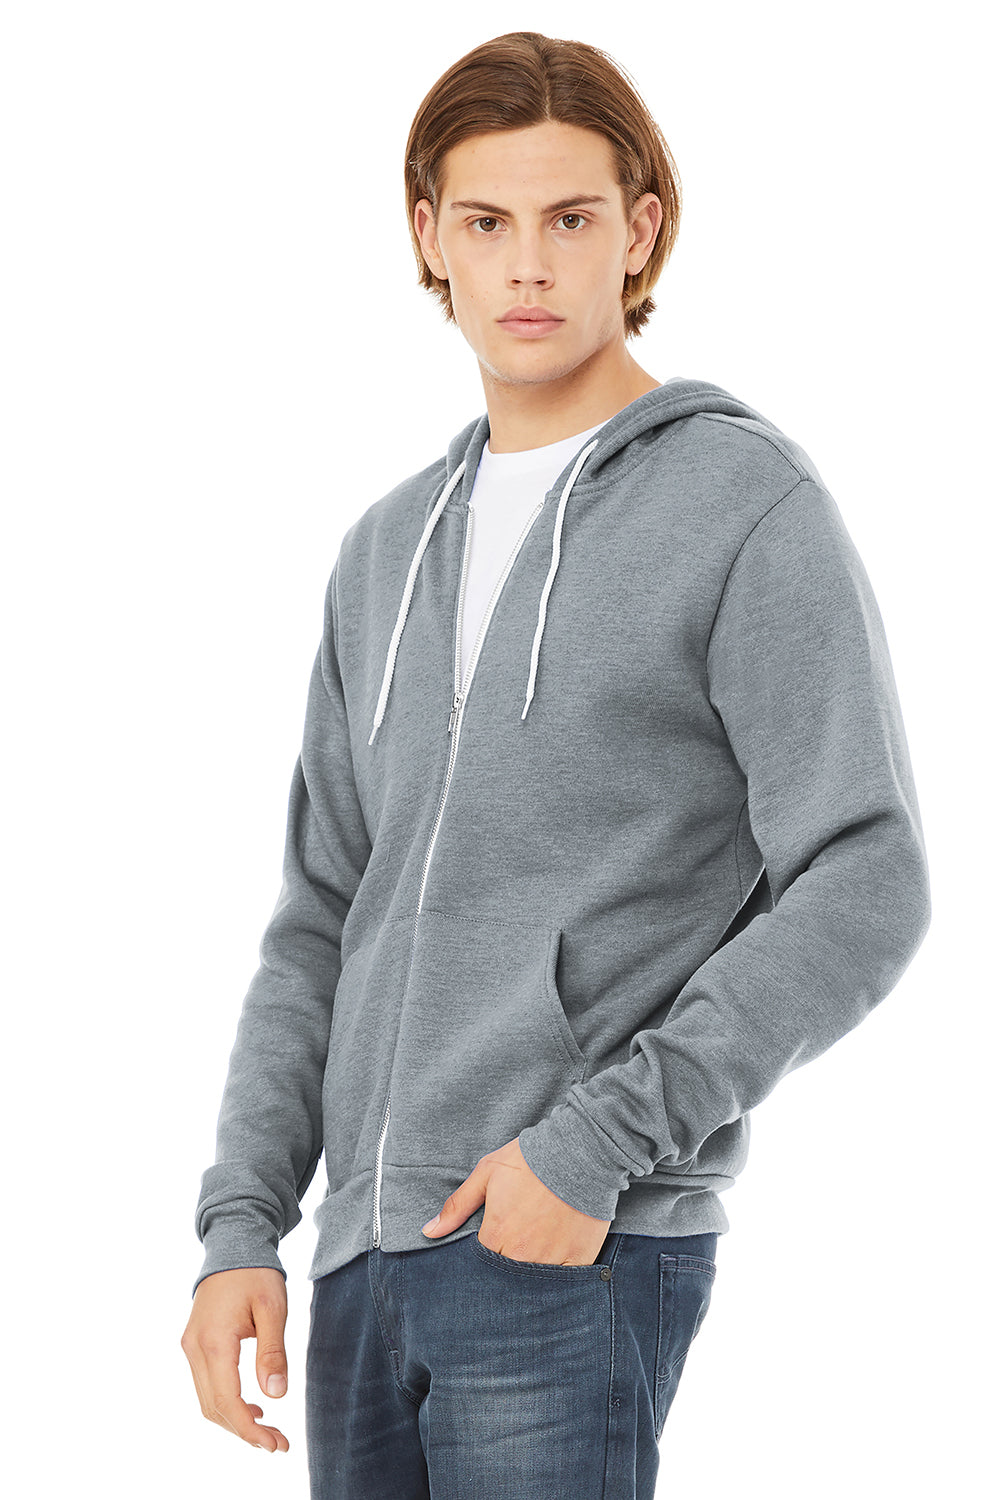 Bella + Canvas BC3739/3739 Mens Fleece Full Zip Hooded Sweatshirt Hoodie Heather Grey Model 3Q